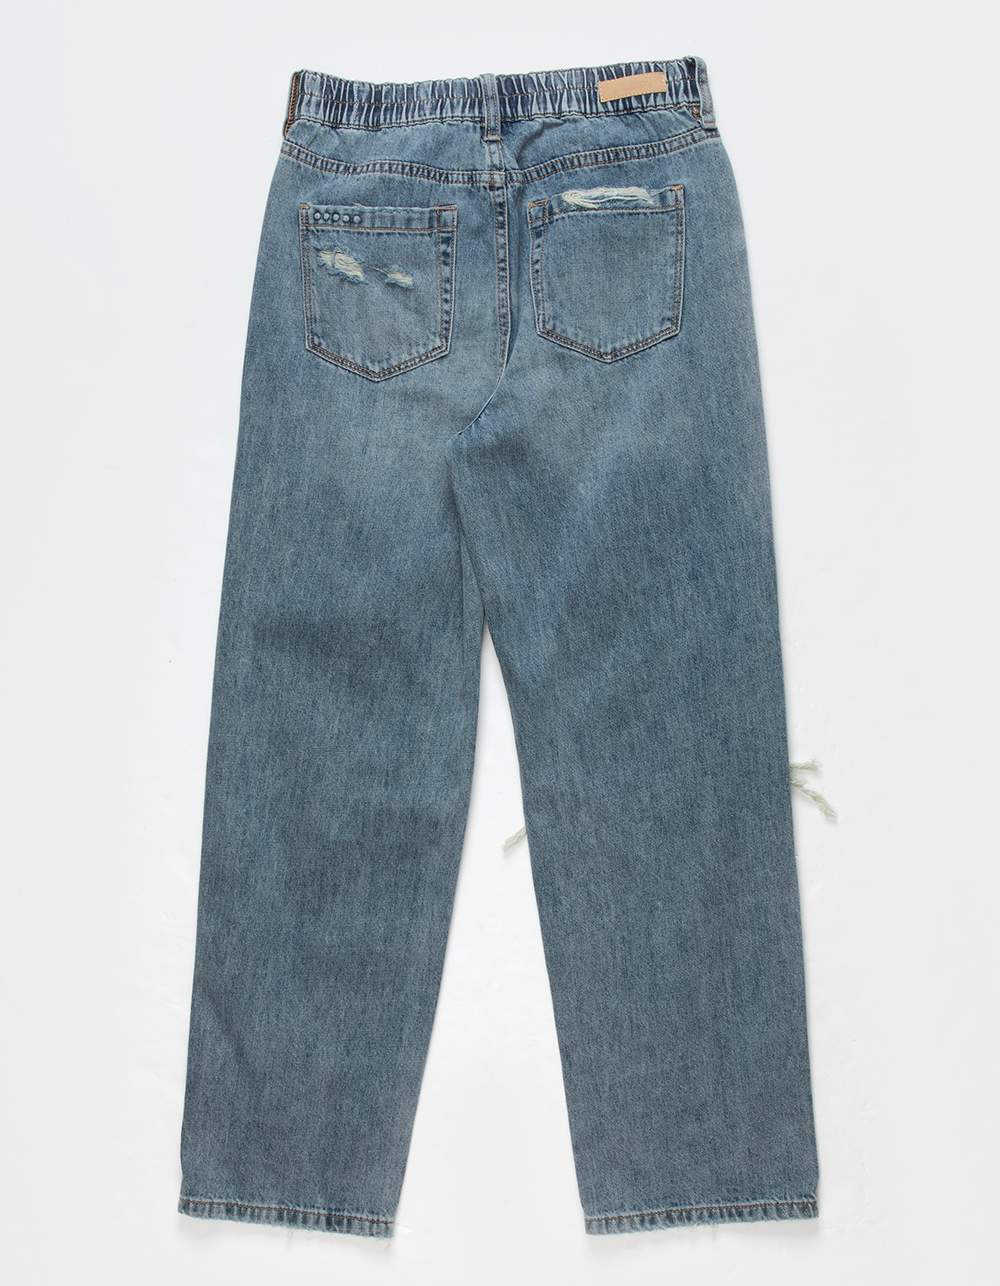 BLANK NYC Destructed Girls Jeans - MEDIUM WASH